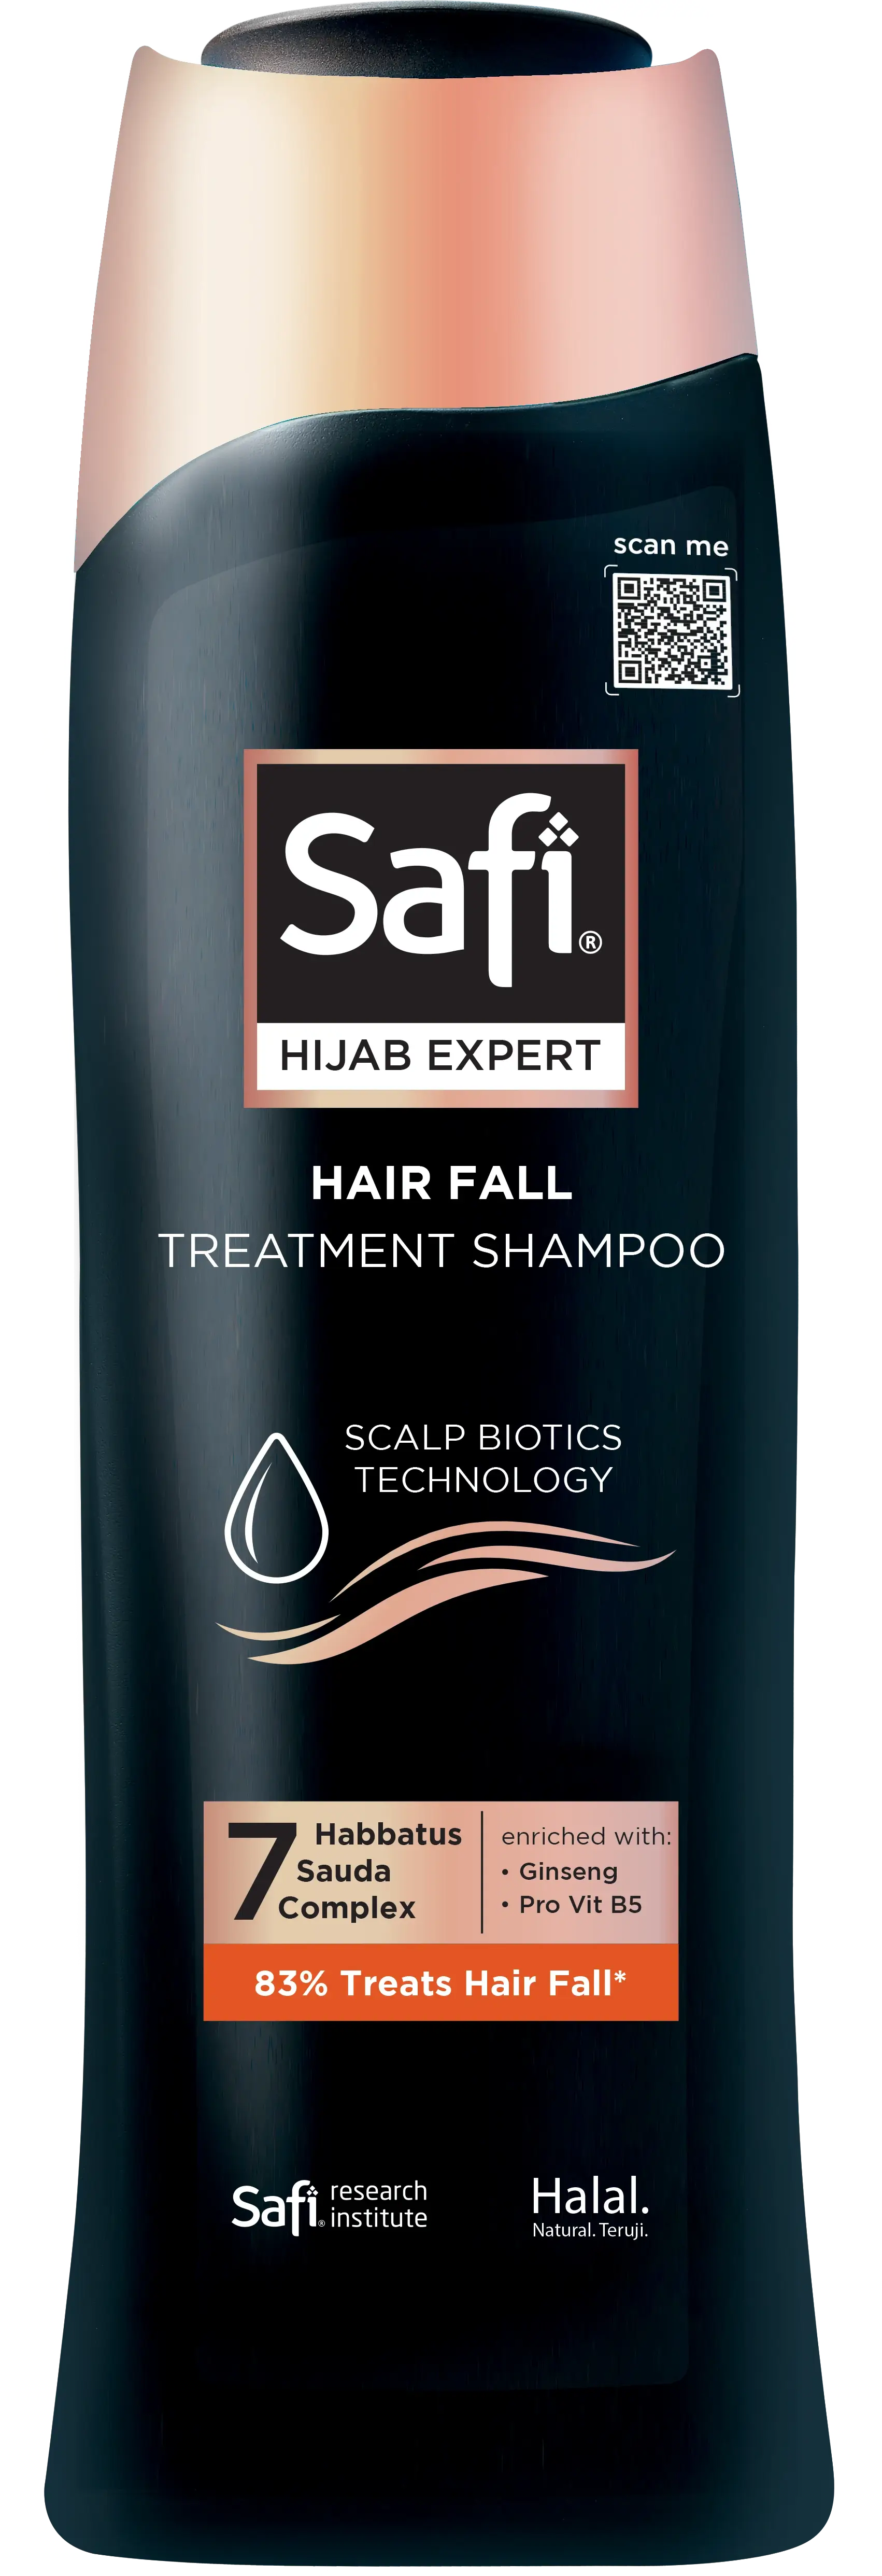 Safi Hijab Expert Hairfall Treatment Shampoo